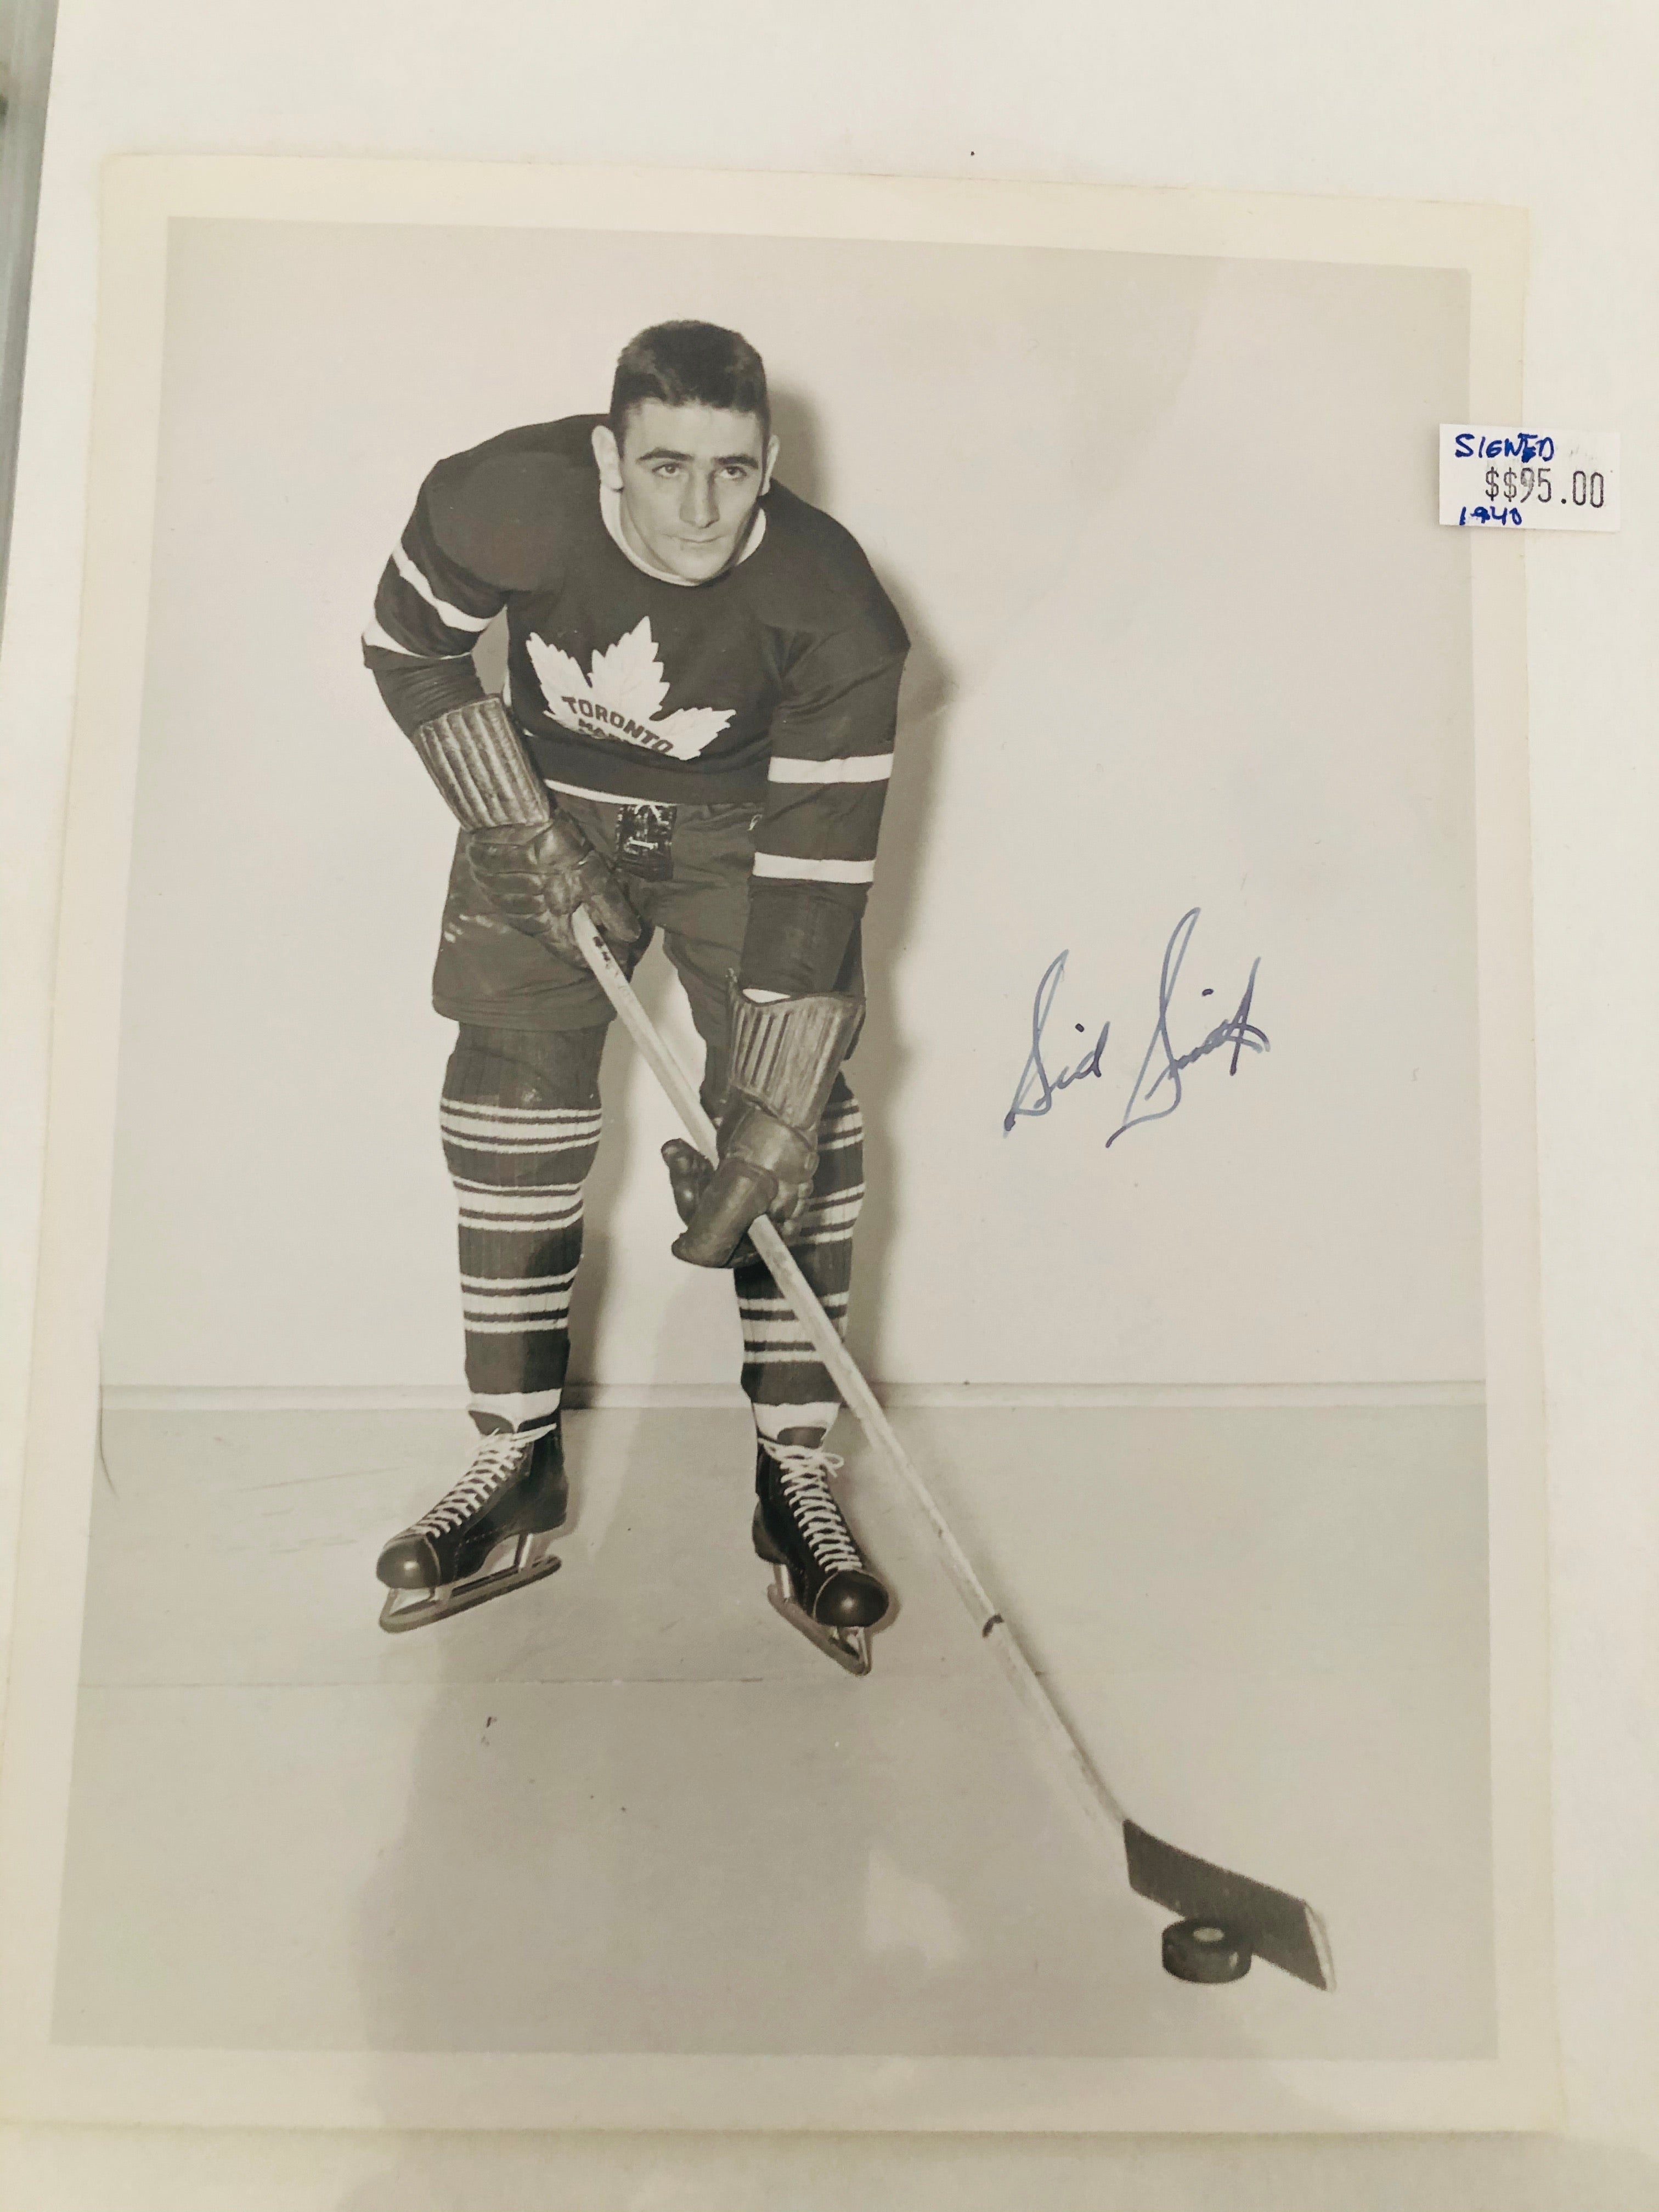 Toronto Maple Leafs Sid Smith rare signed photo with COA